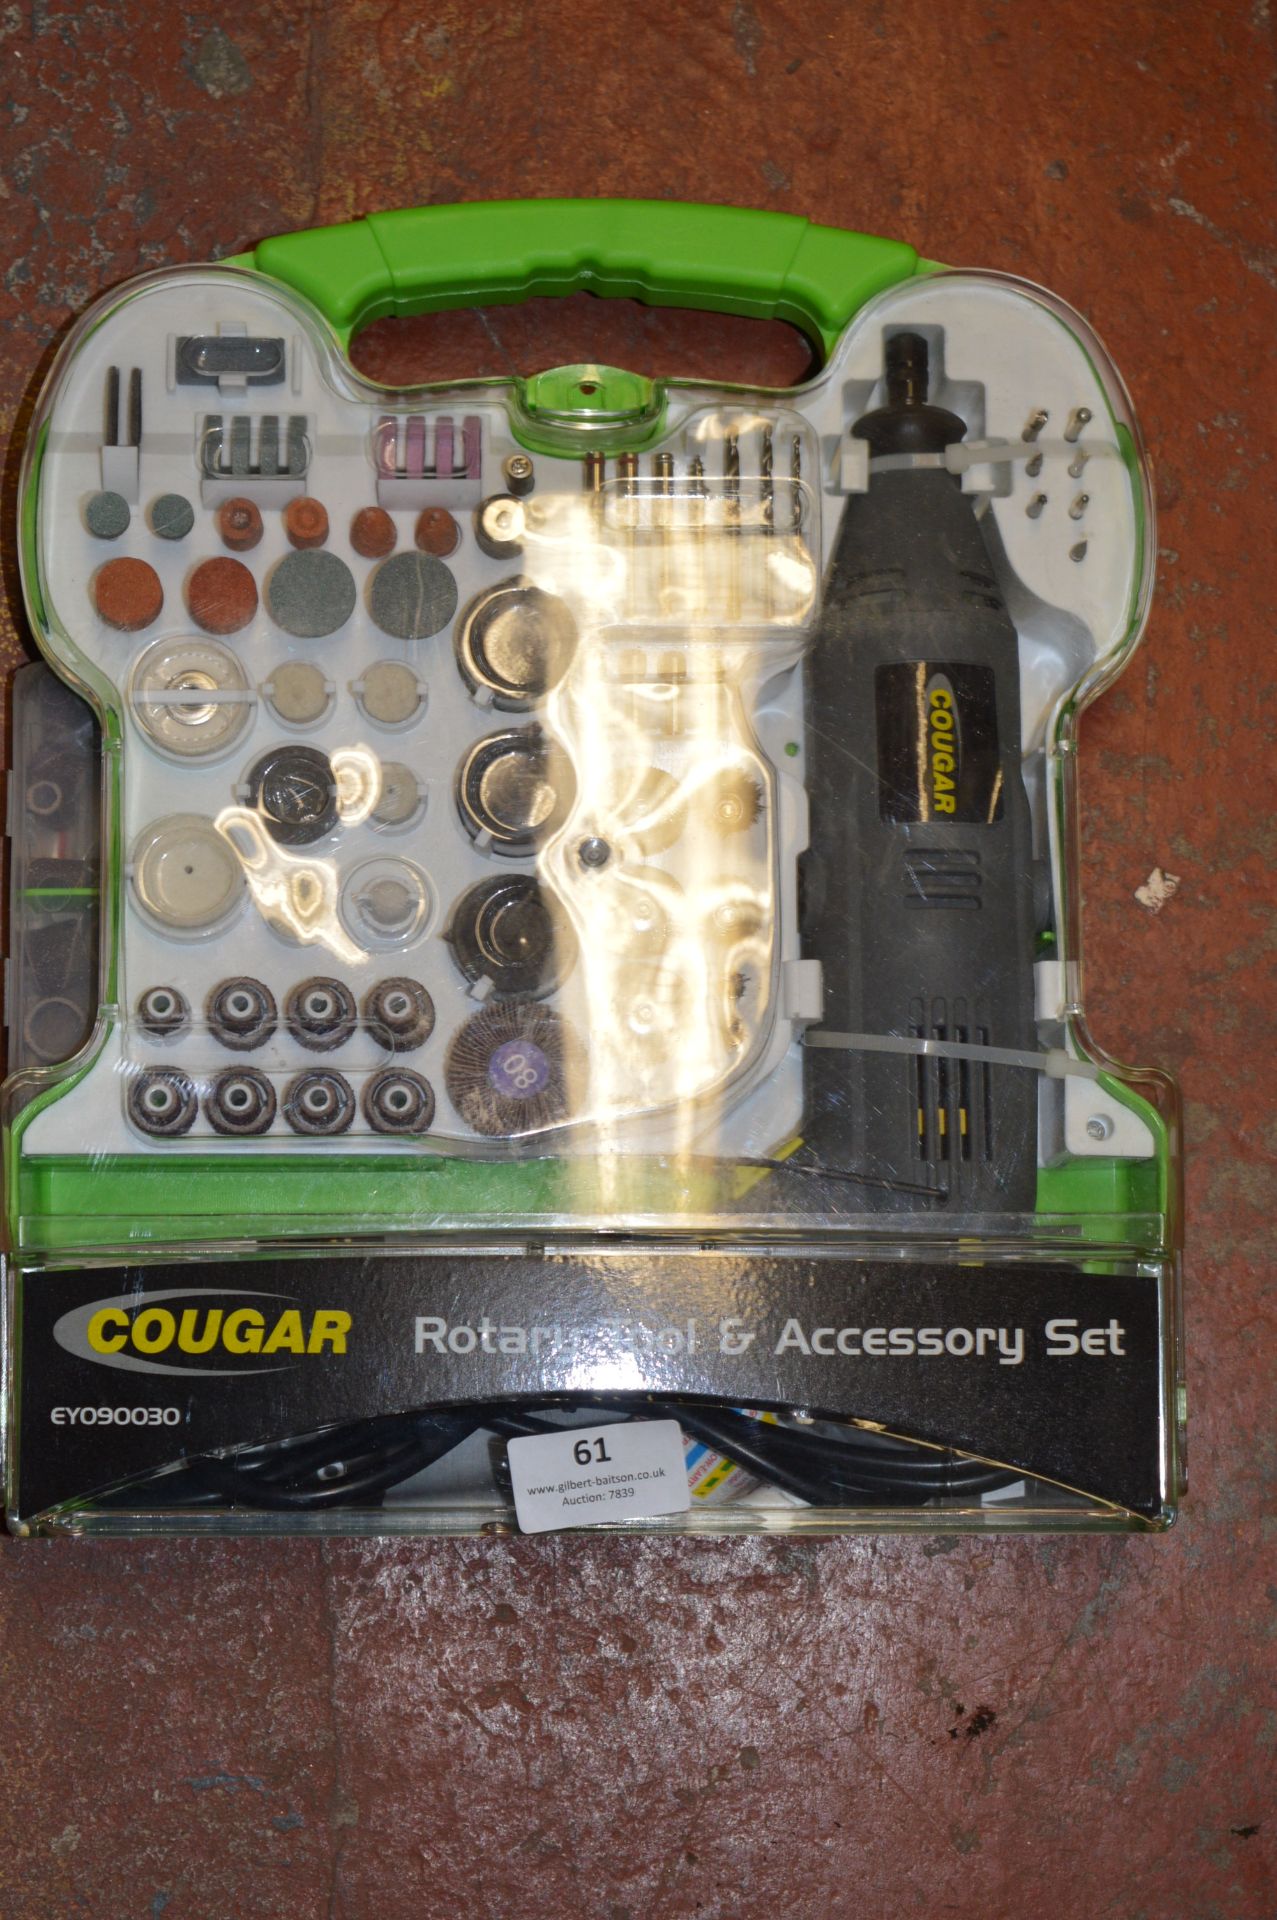 Cougar Precision Tool Set